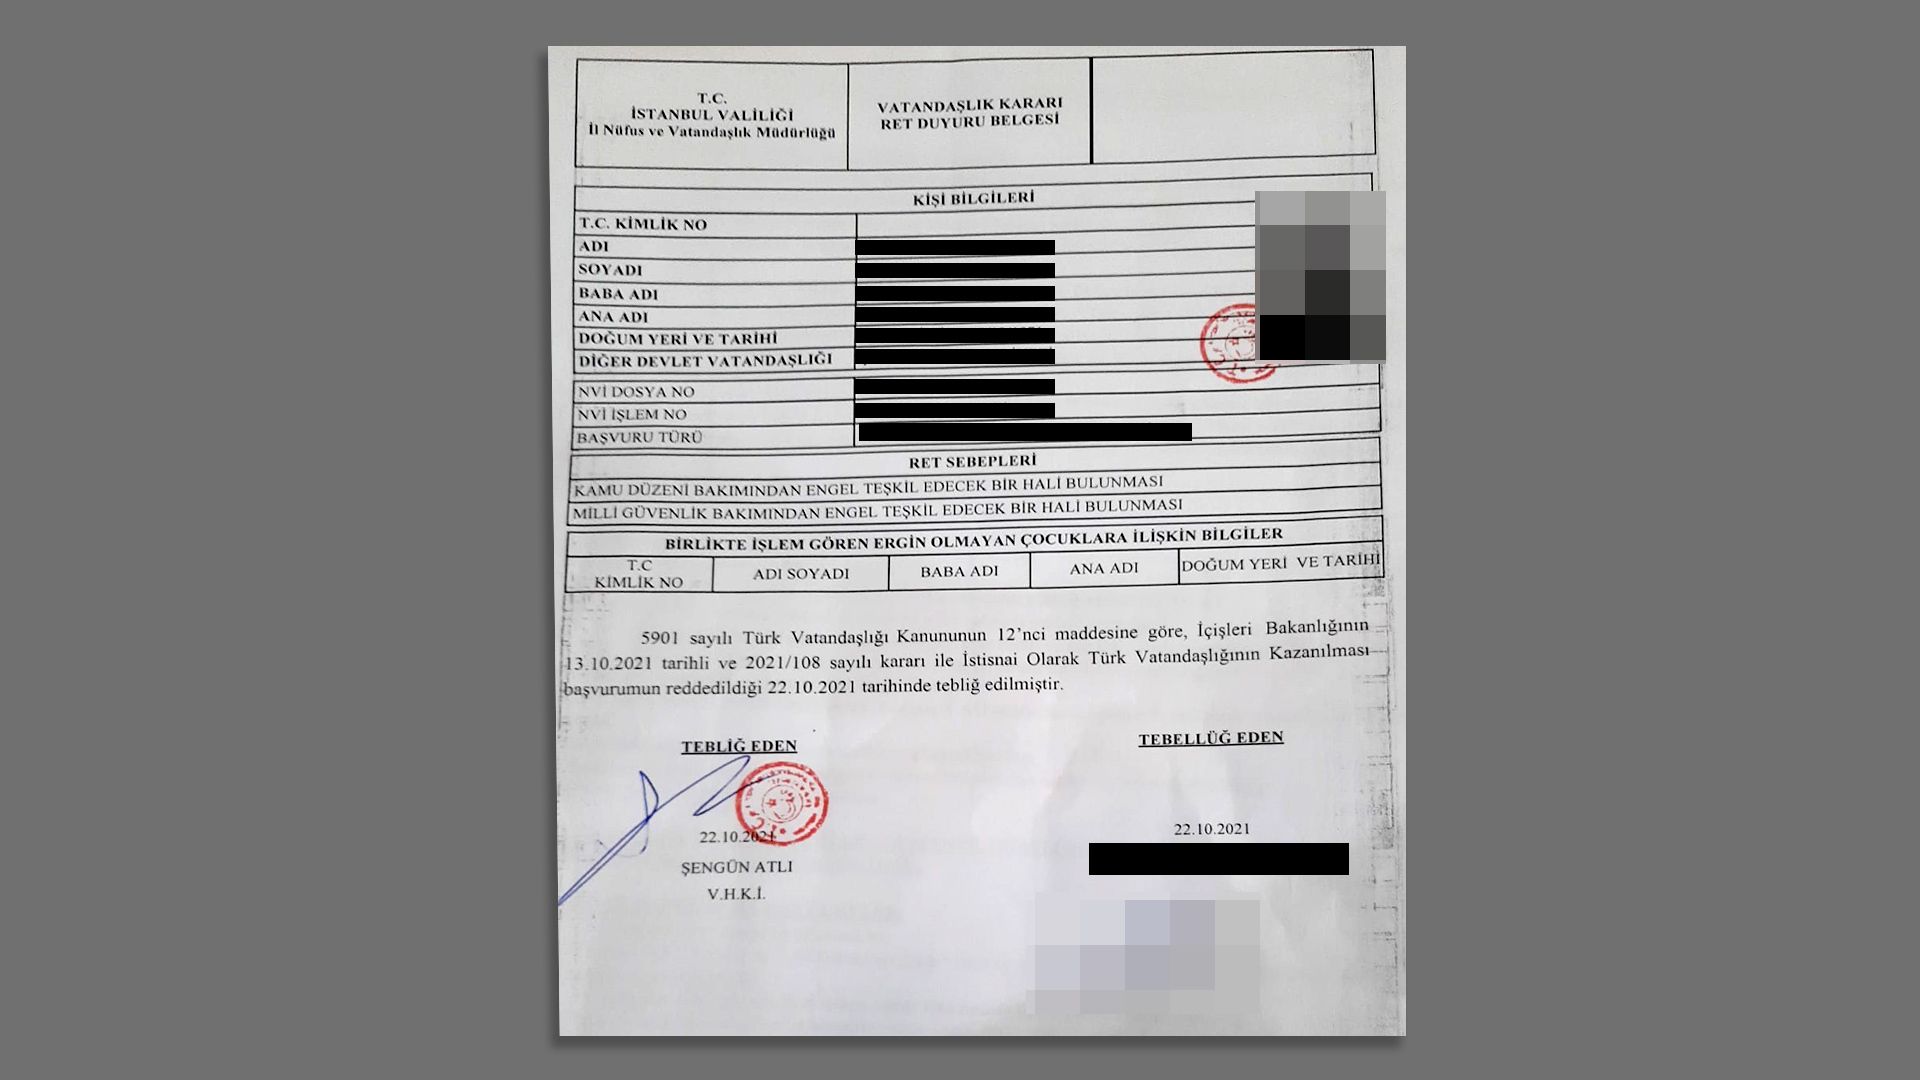 Turkish citizenship application of Uyghur woman